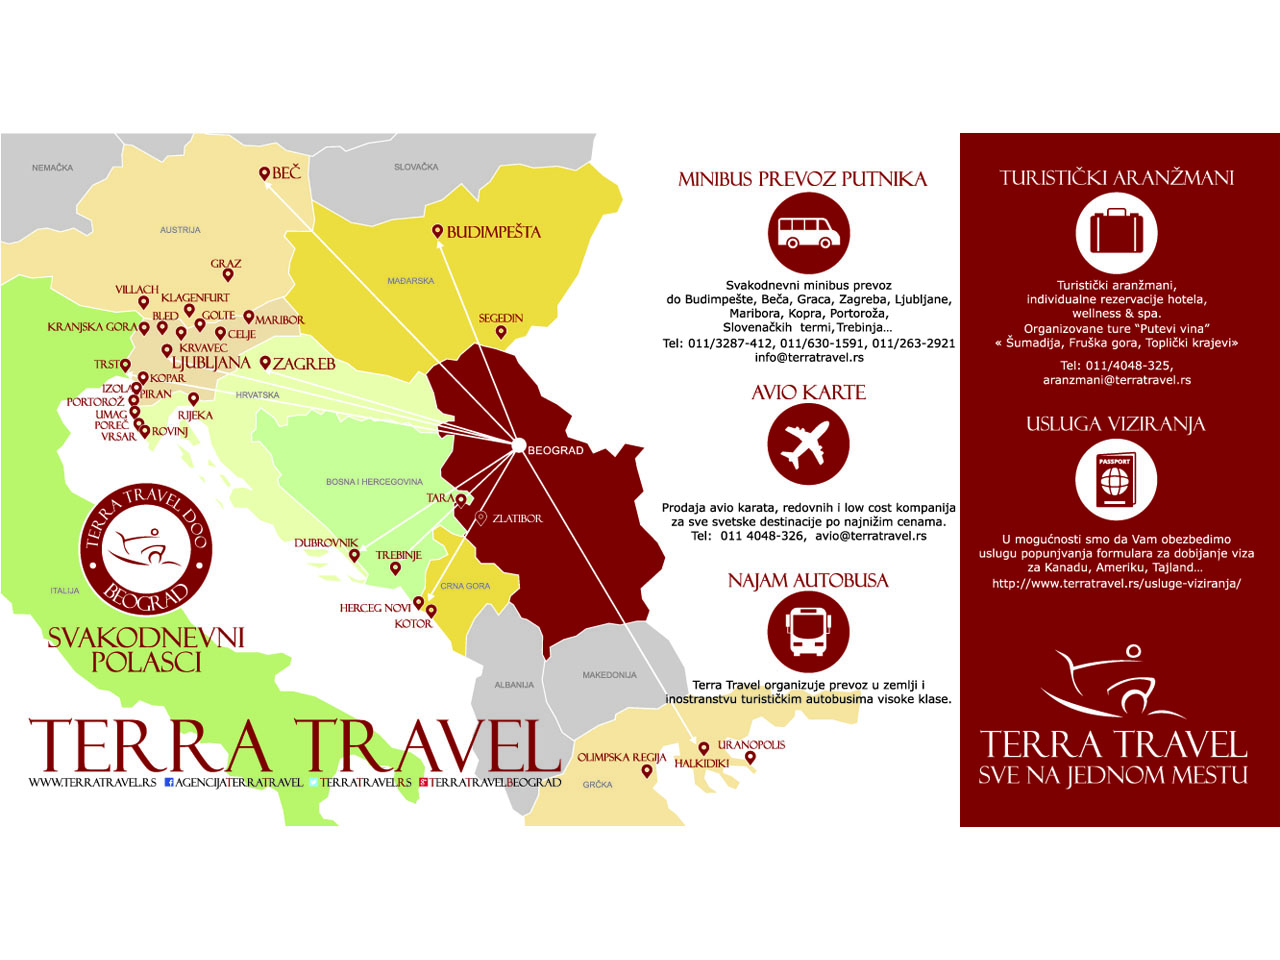 terra travel serbia